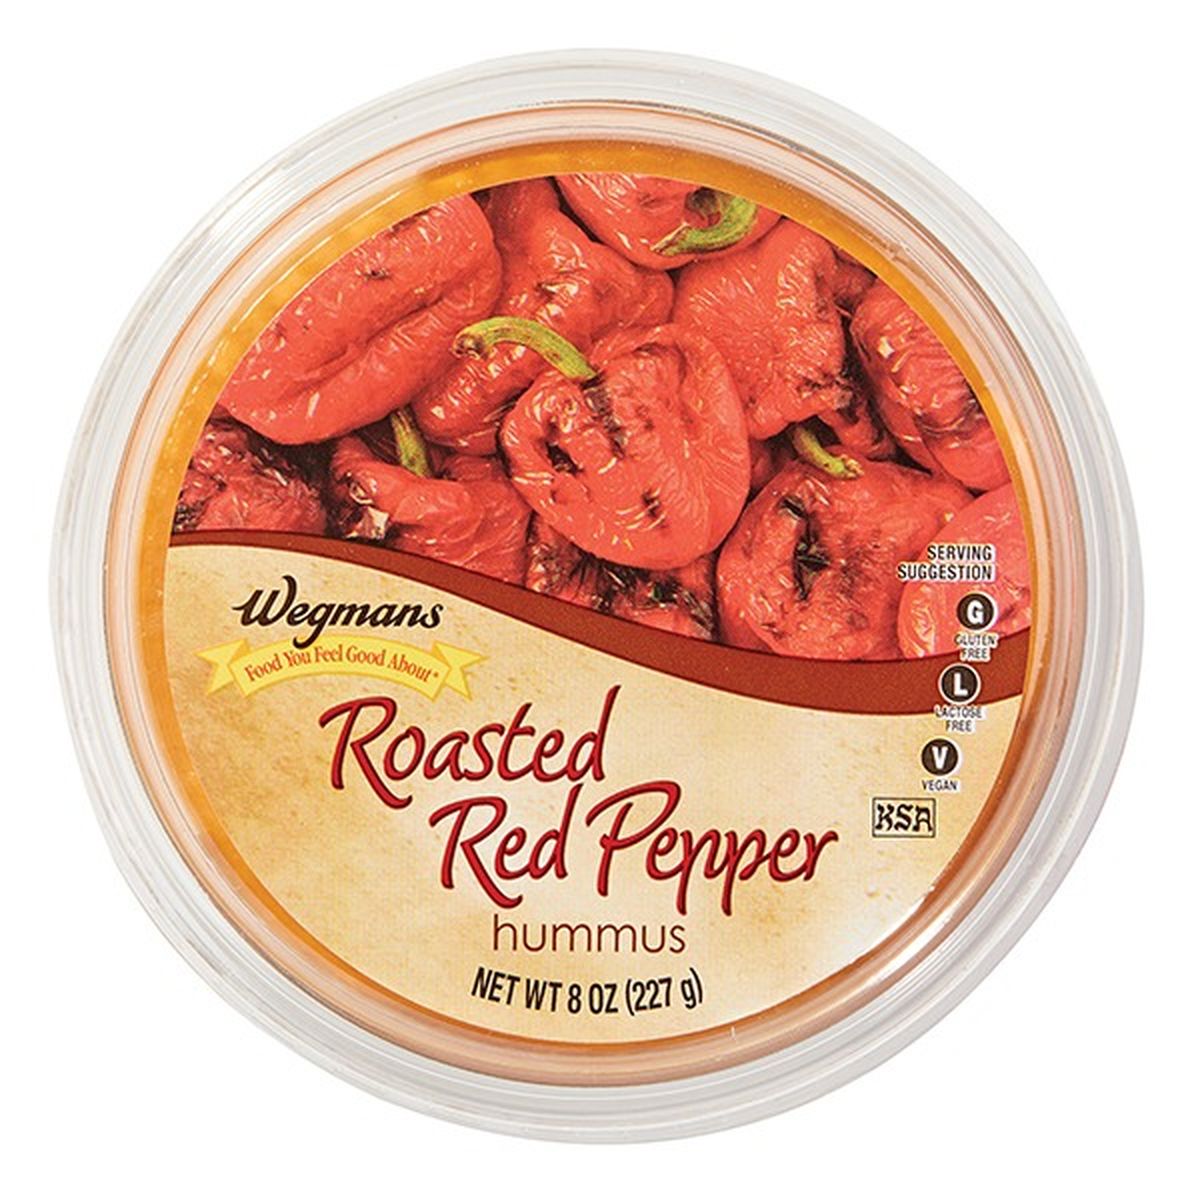 Calories in Wegmans Roasted Red Pepper Hummus